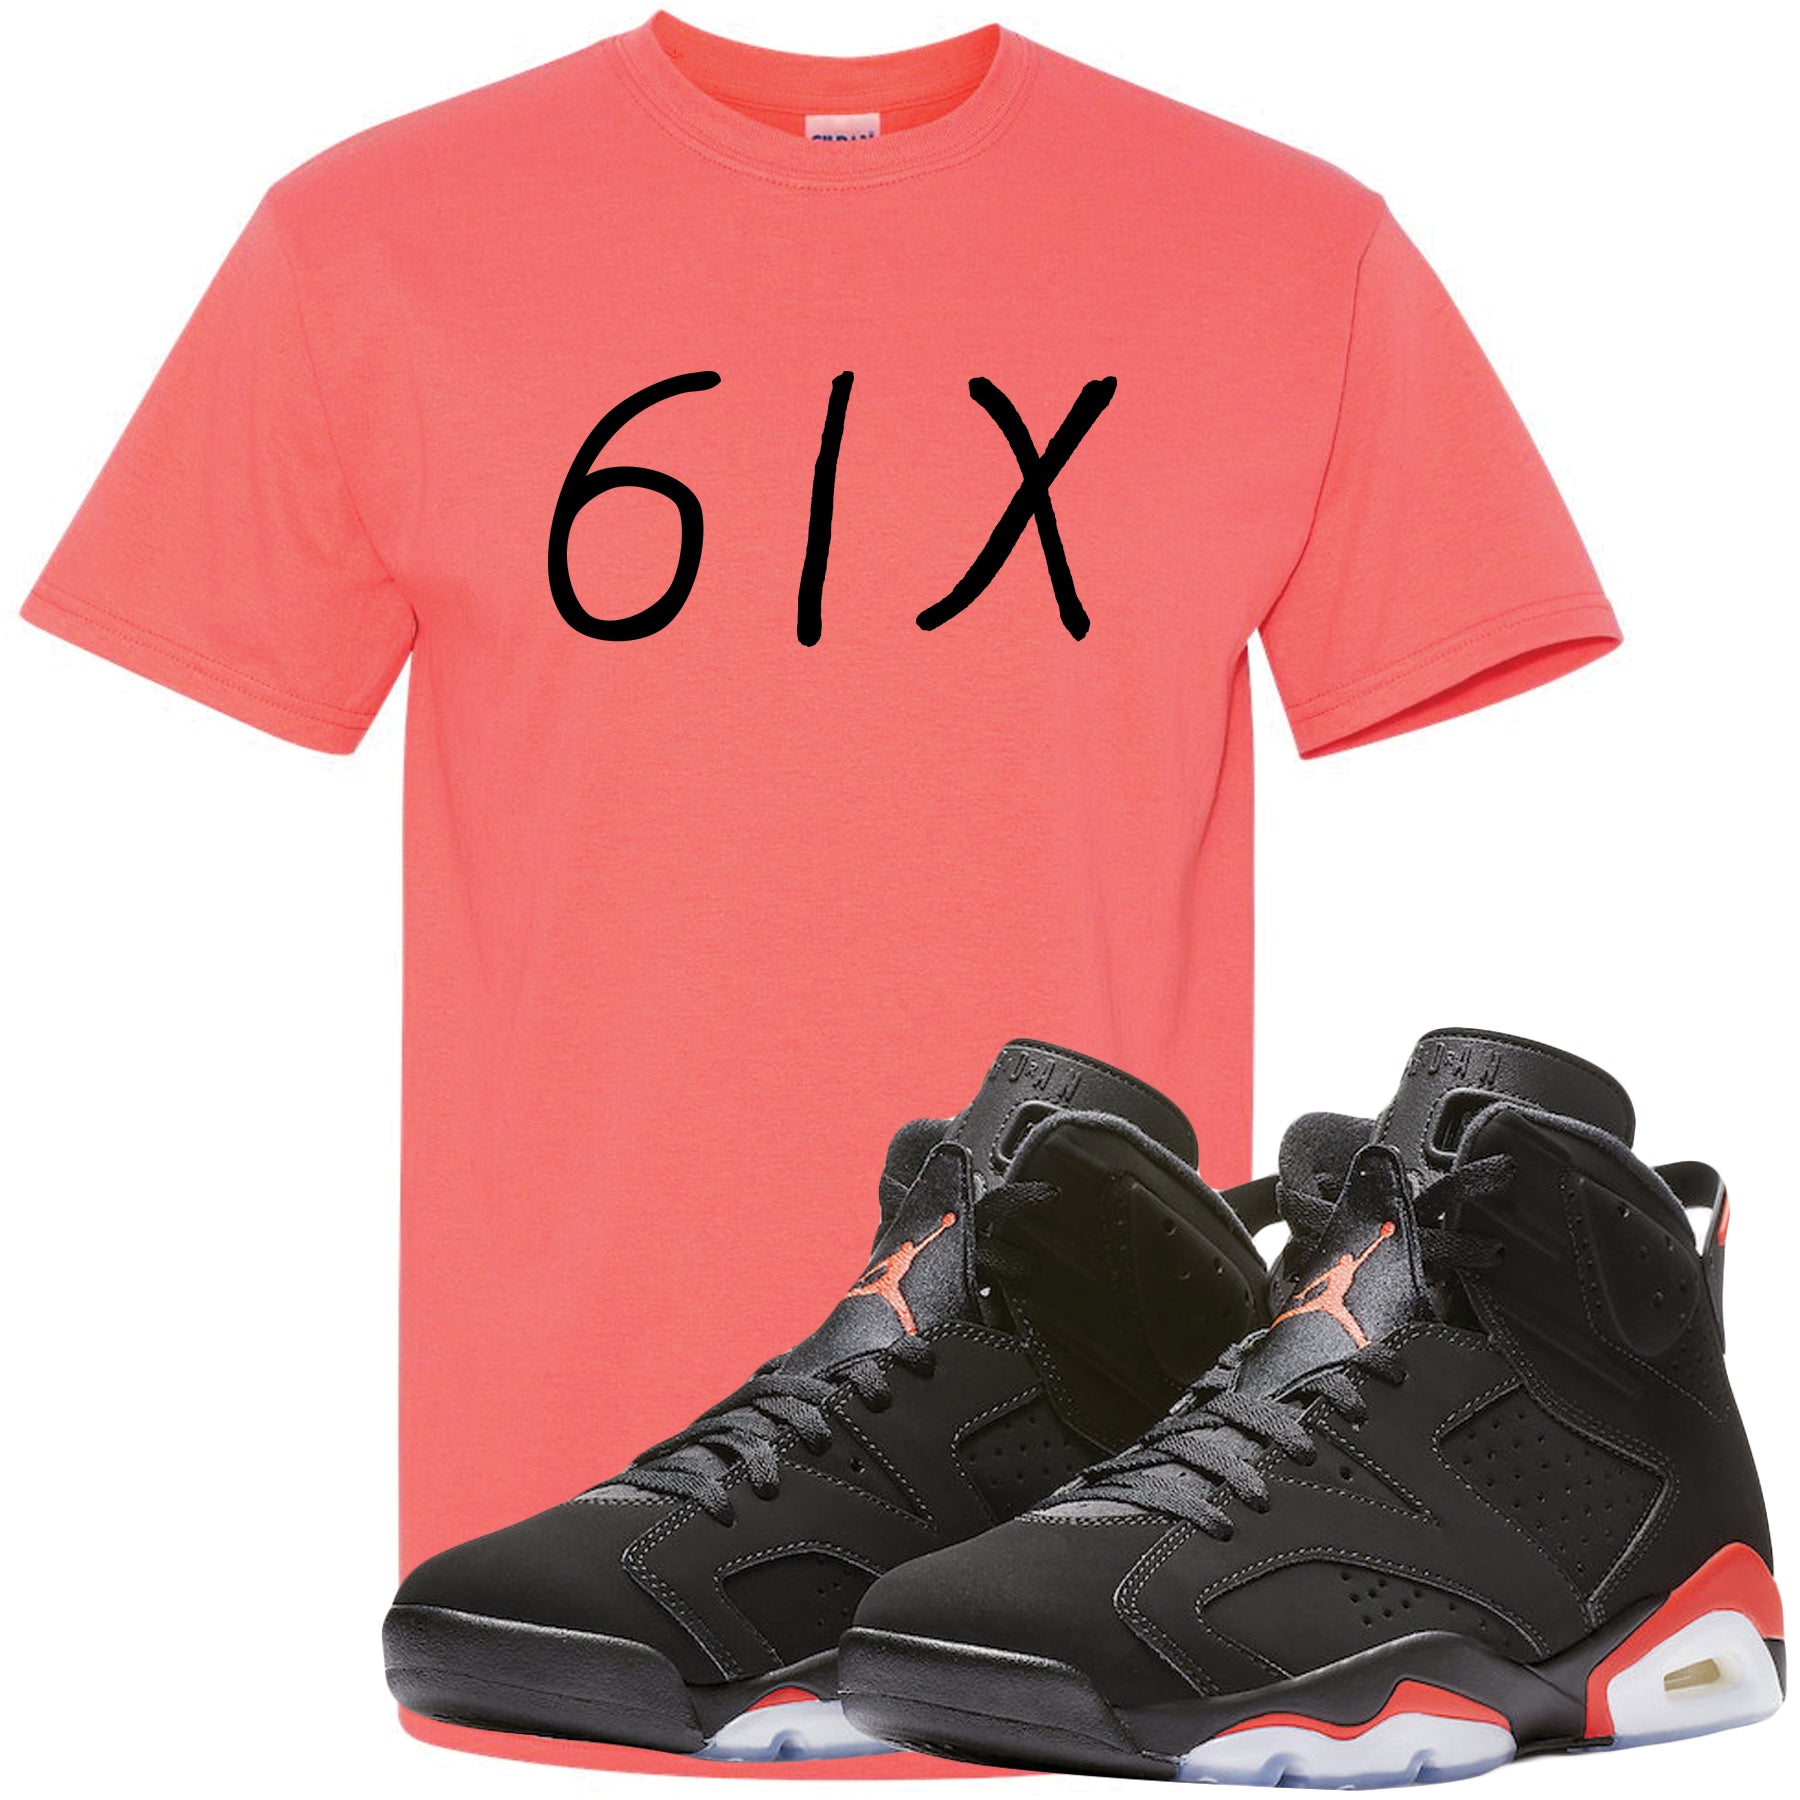 Jordan 6 Infrared Sneaker Hook Up 6ix 